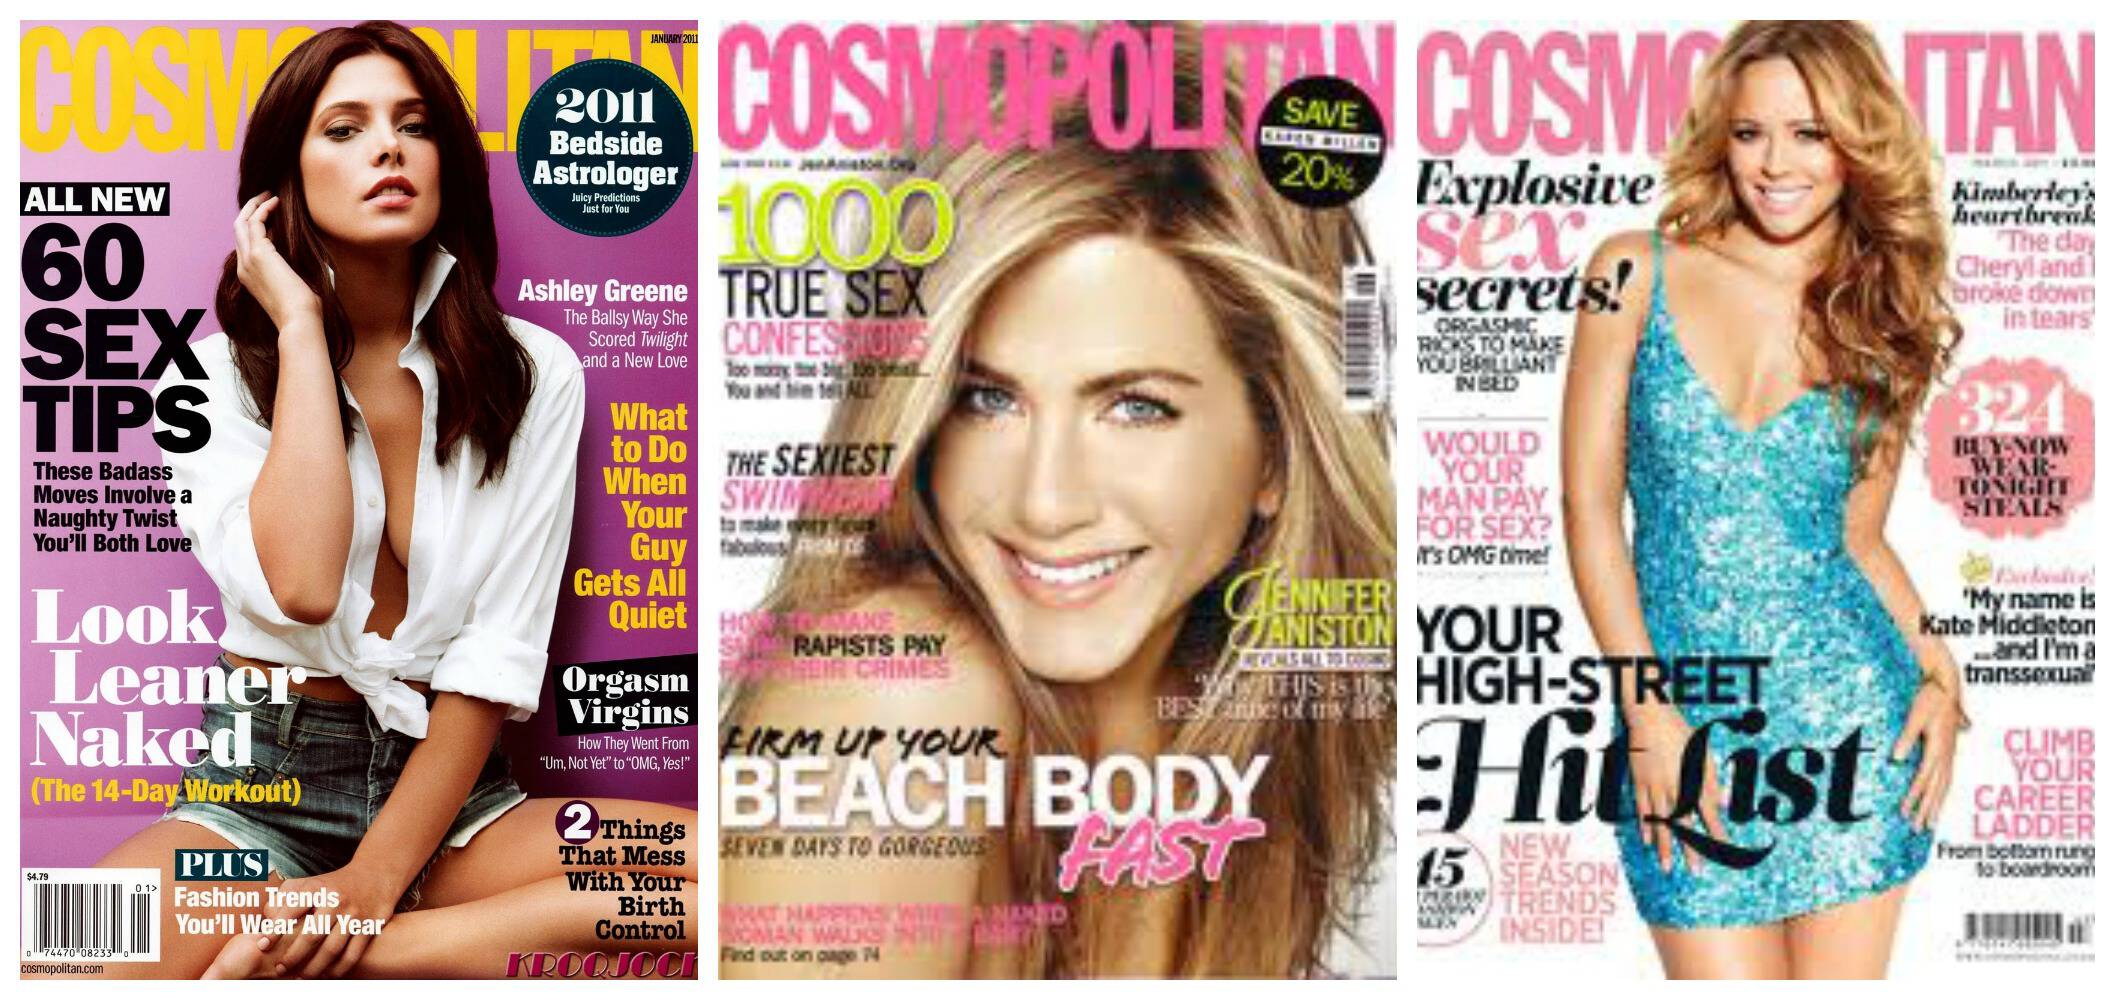 Cosmopolitan magazine